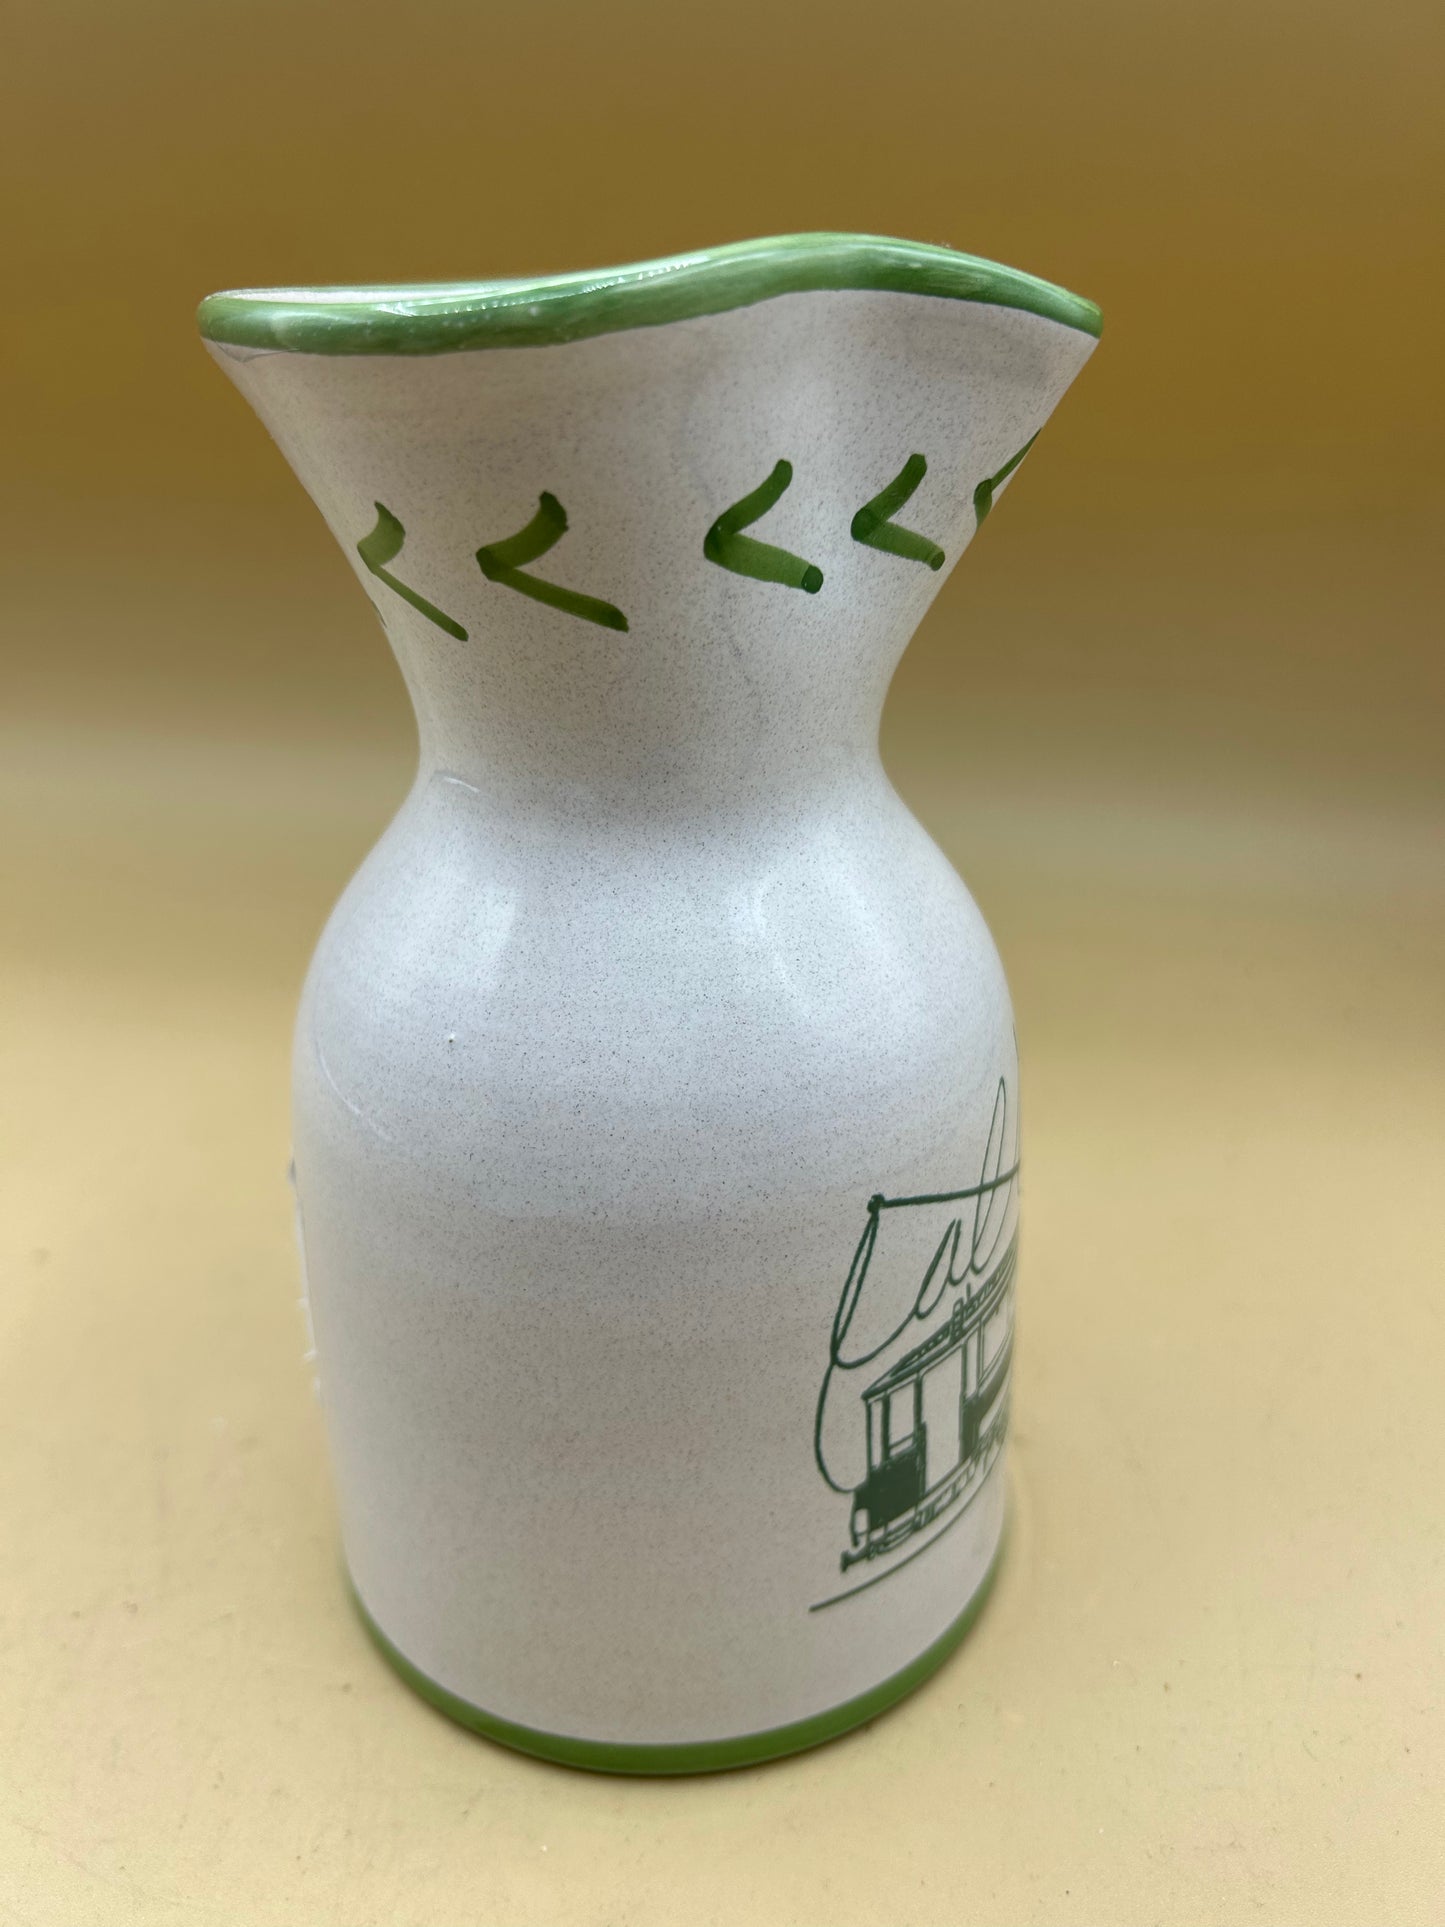 Tramvai Torretti Deruta ceramic jug hand painted bottle for water or wine with tram design